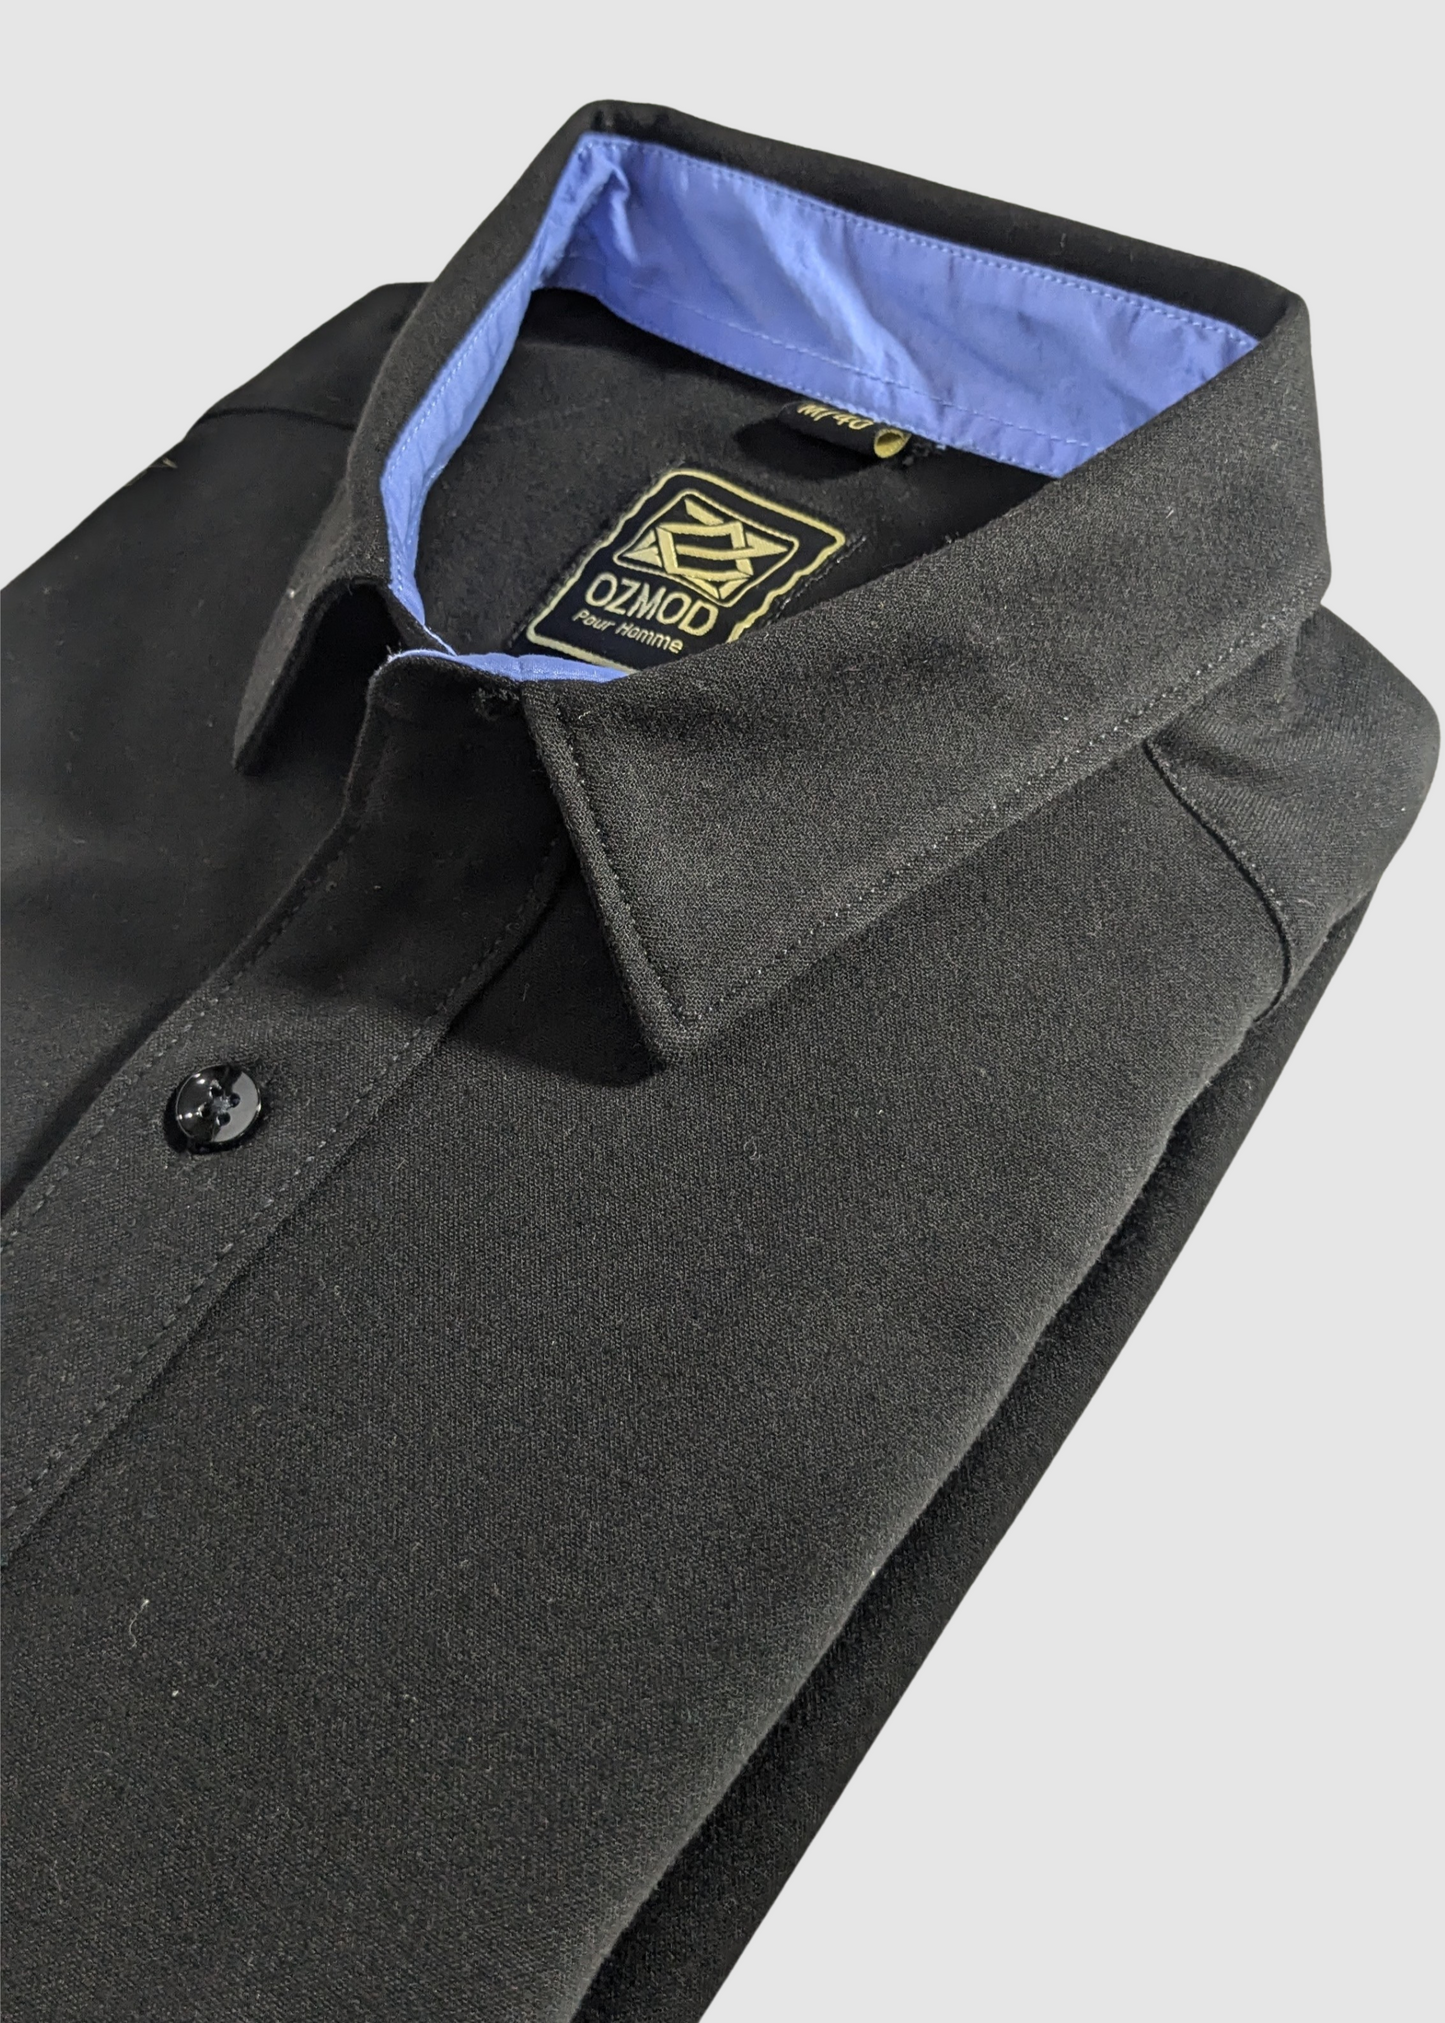 Black Contrast Men Shirt in POLYSPANDEX with Full Sleeves & Single Pocket